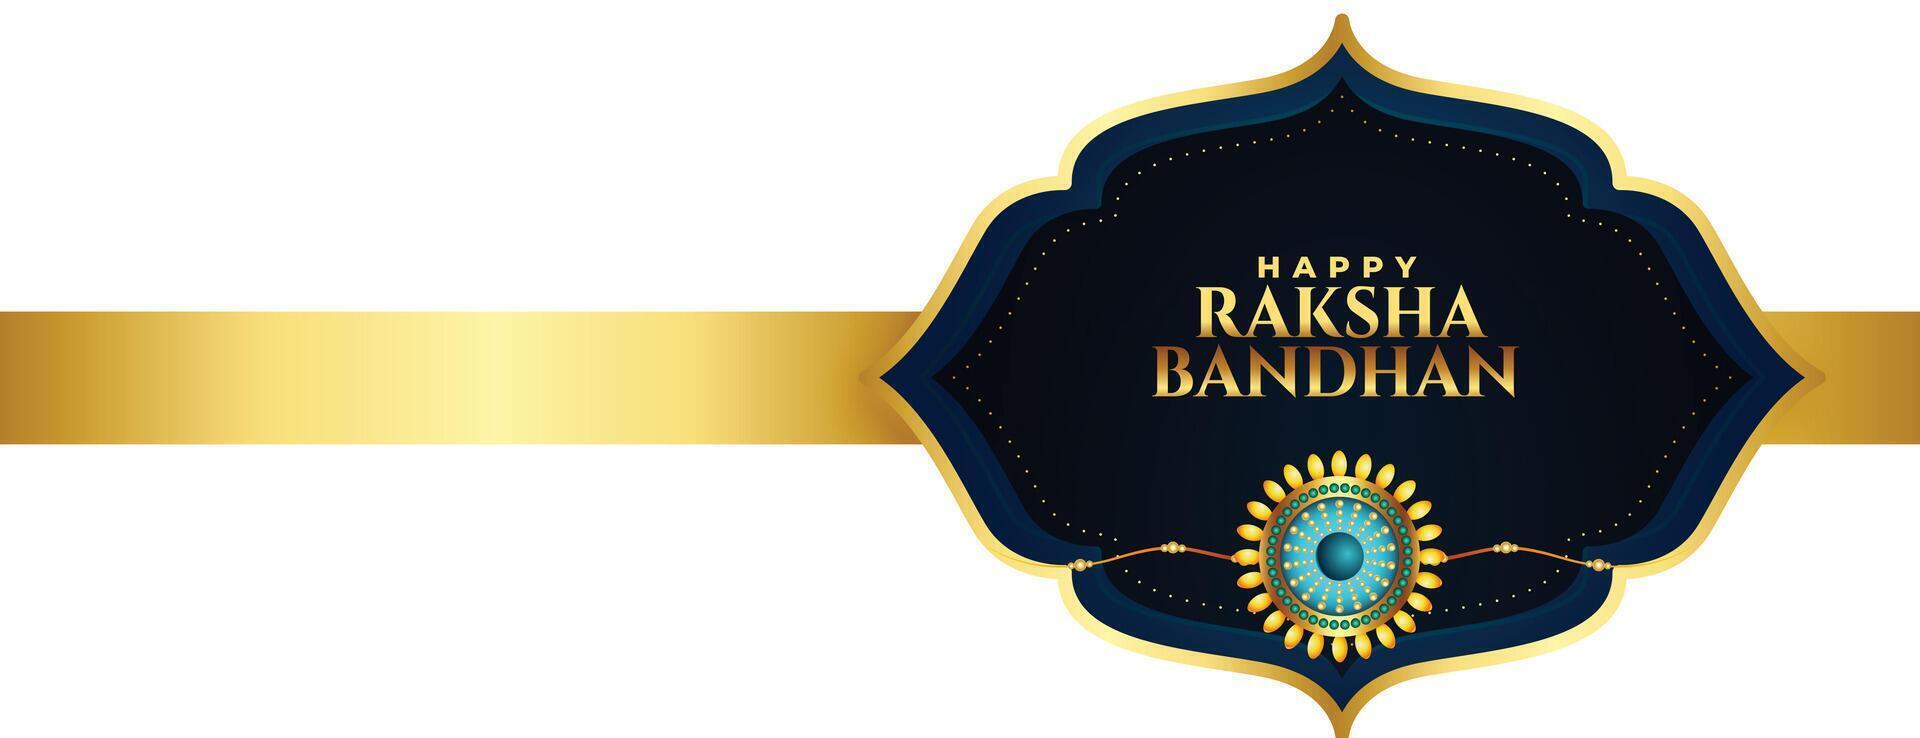 glücklich Raksha Bandhan Festival Banner golden Design vektor